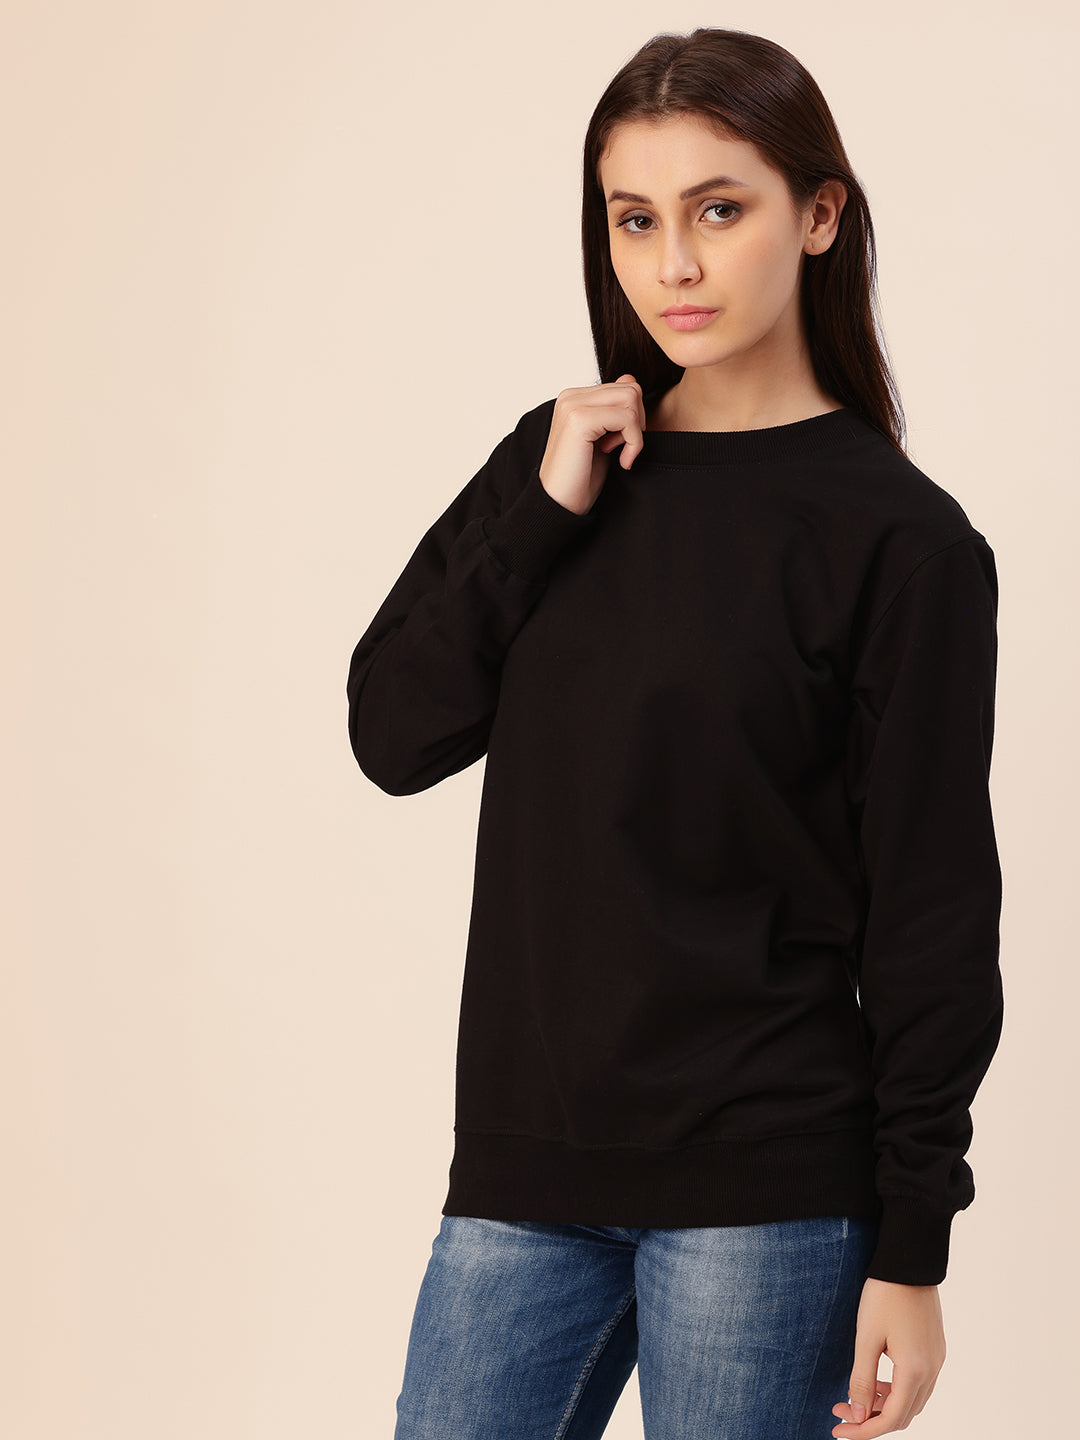 Black Solid Cotton Fleece Sweatshirt